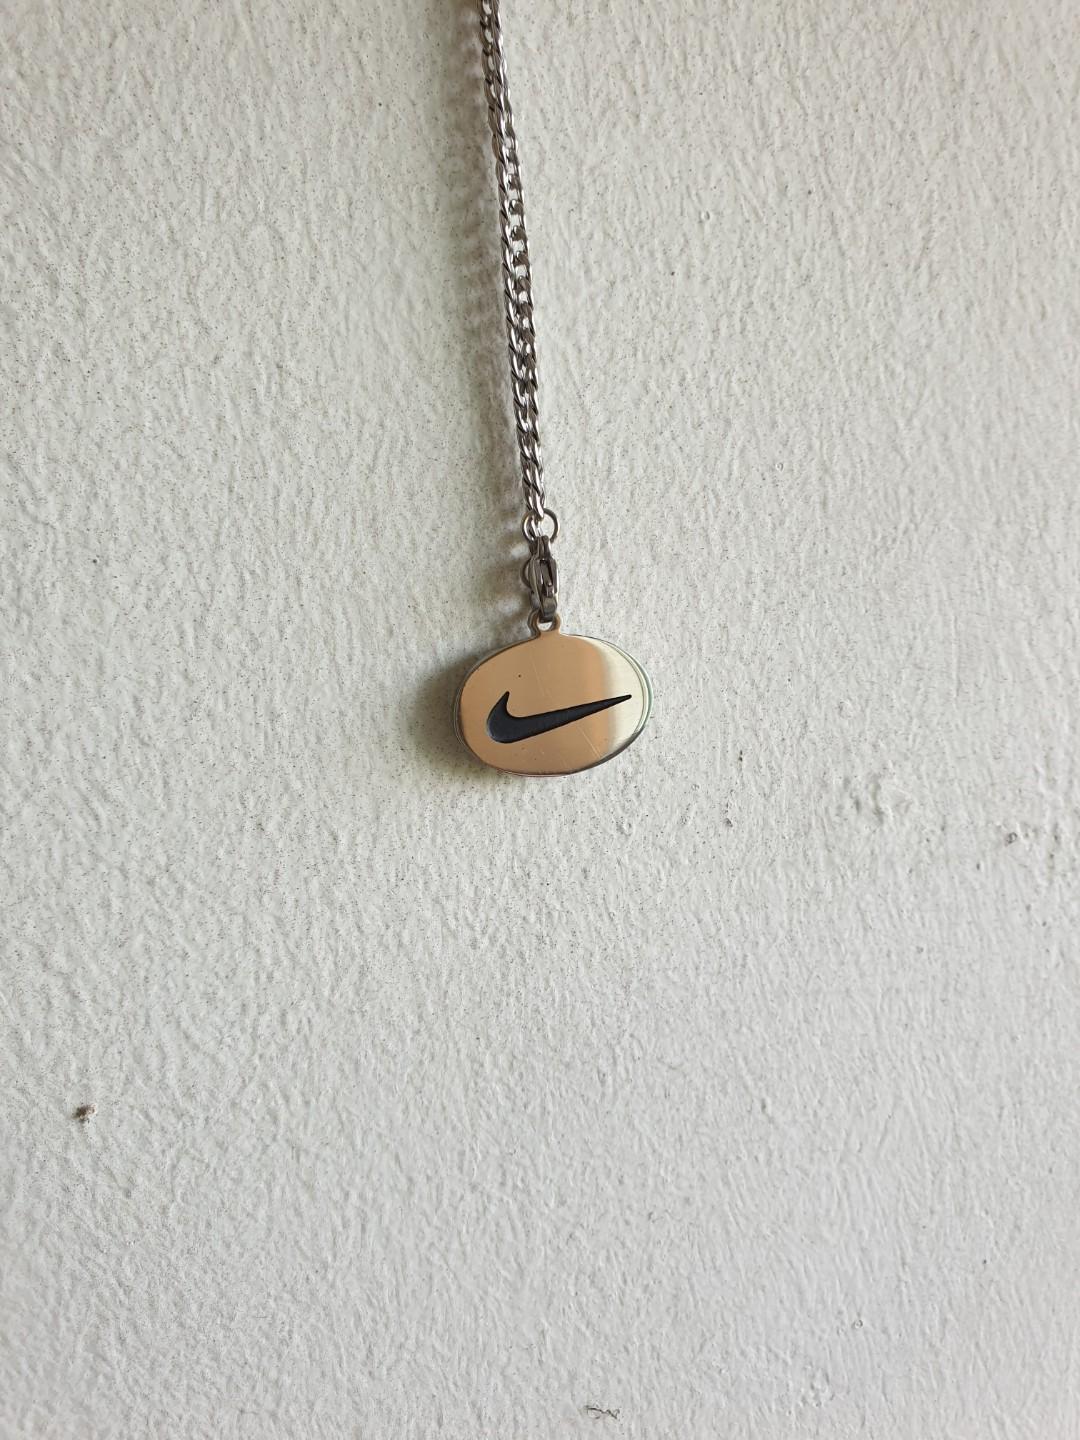 Nike Swoosh Logo Pendant with 18 Figaro Chain in 14k Yellow Gold